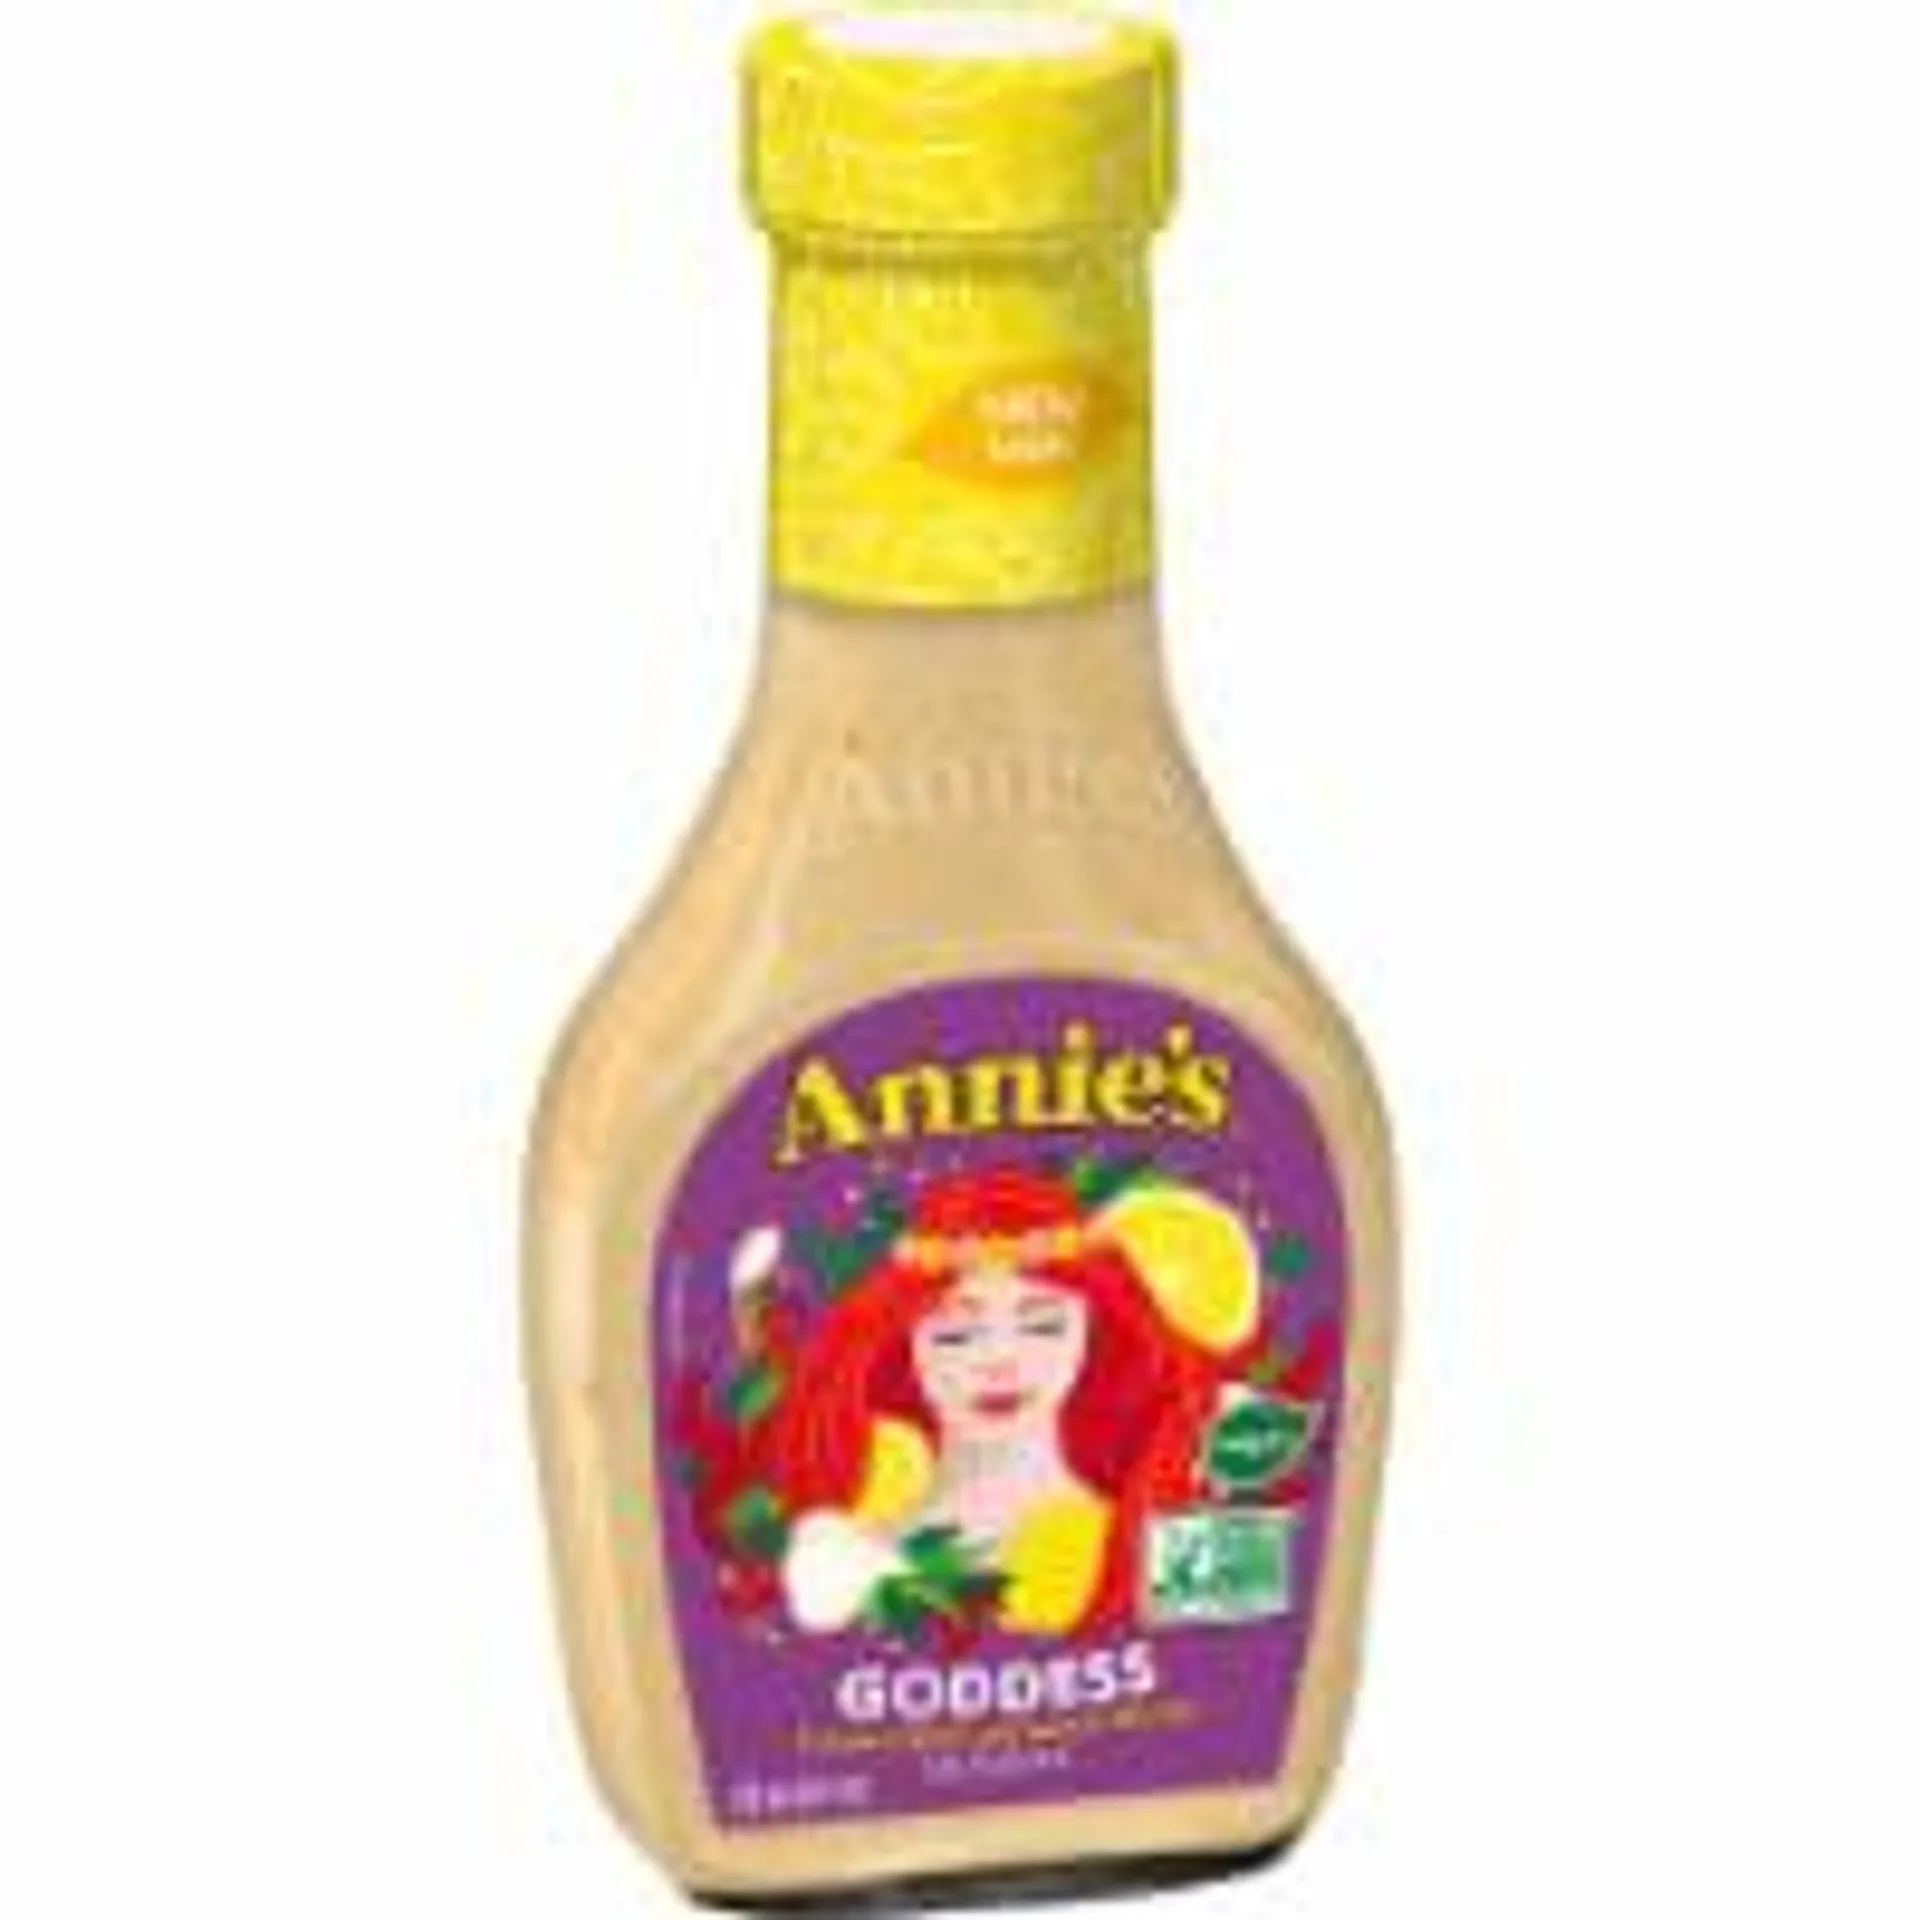 Annie's™ Vegan Goddess Salad Dressing